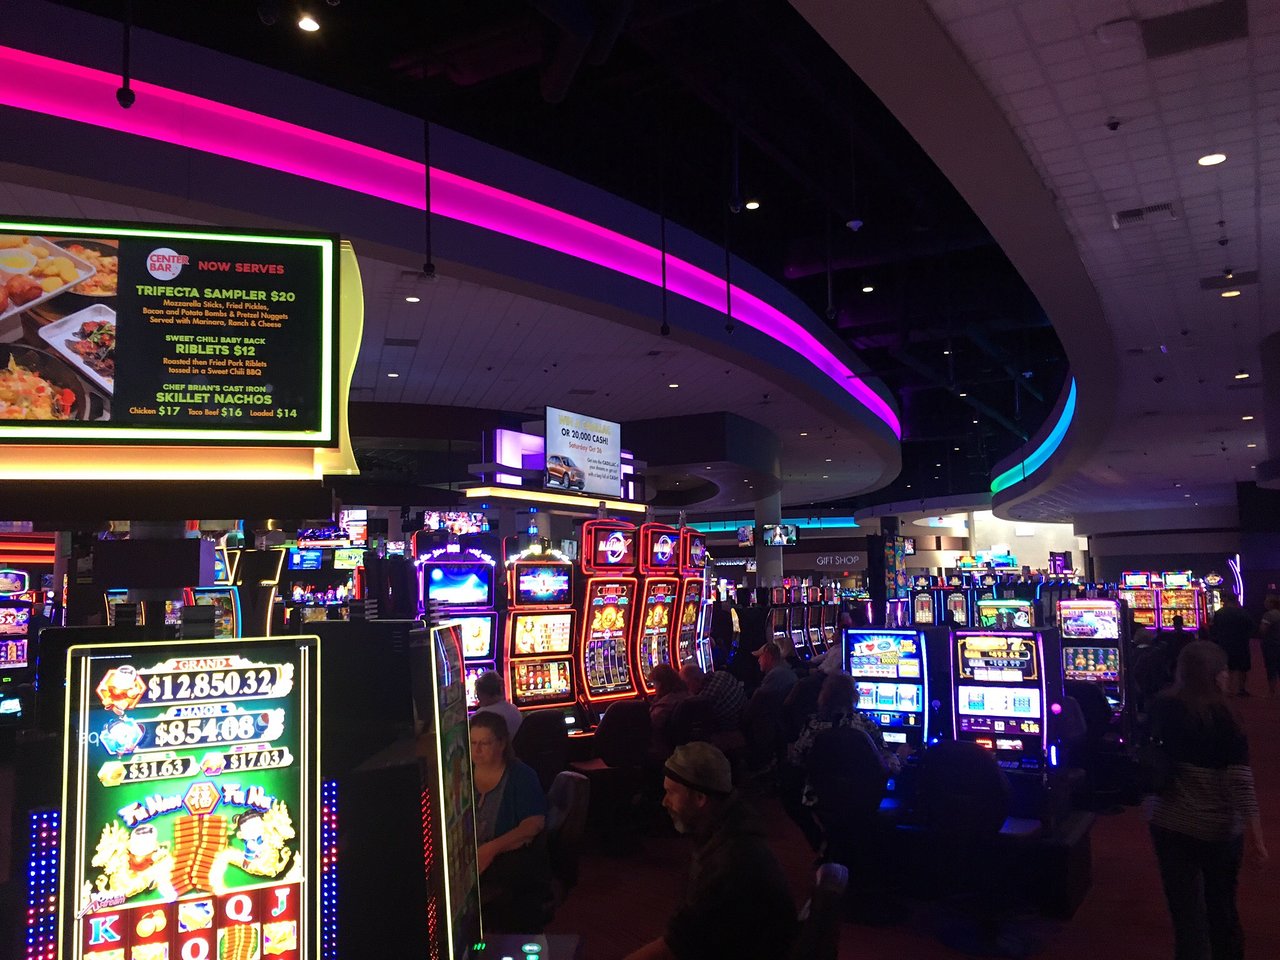 Closest casino to lebanon ohio airport